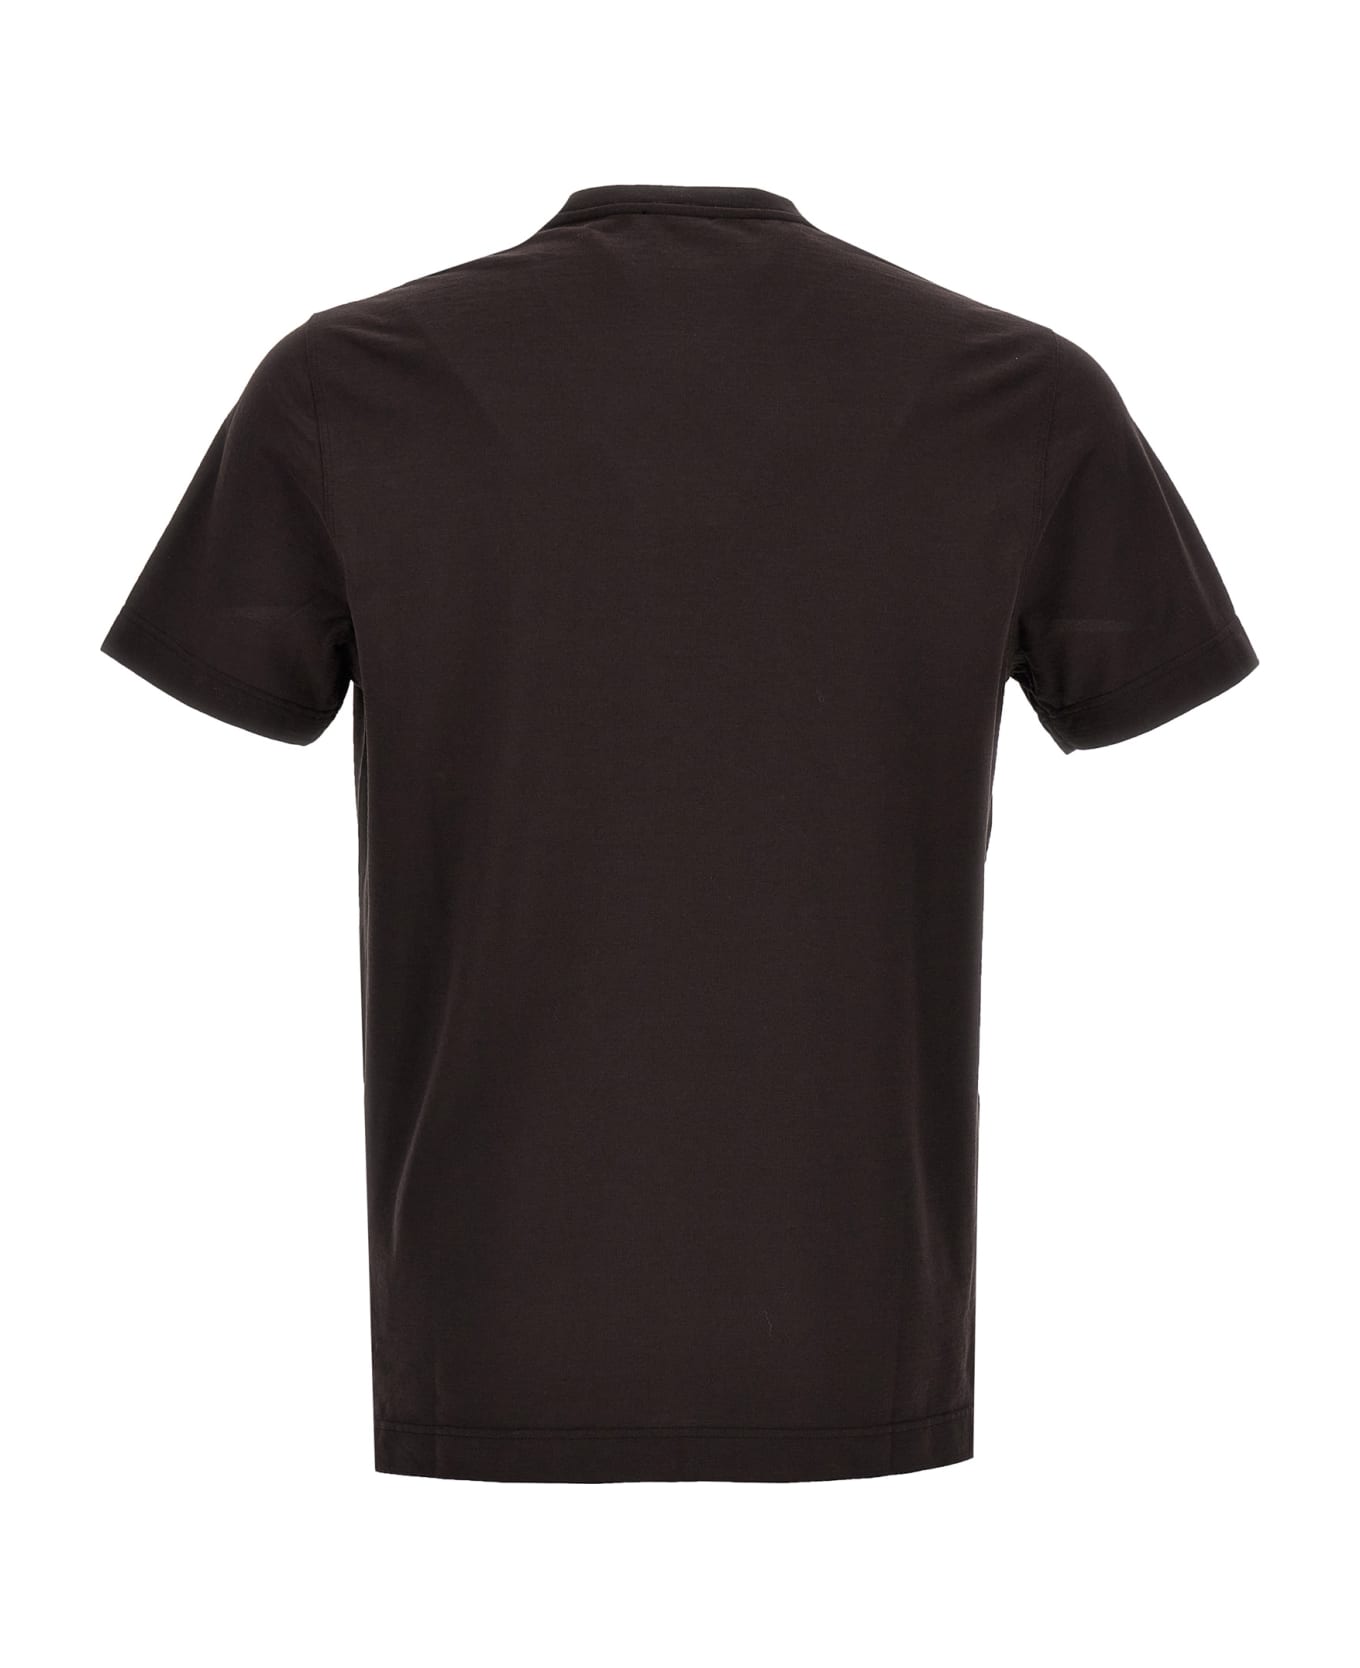 Zanone Ice Cotton T-shirt - Brown シャツ